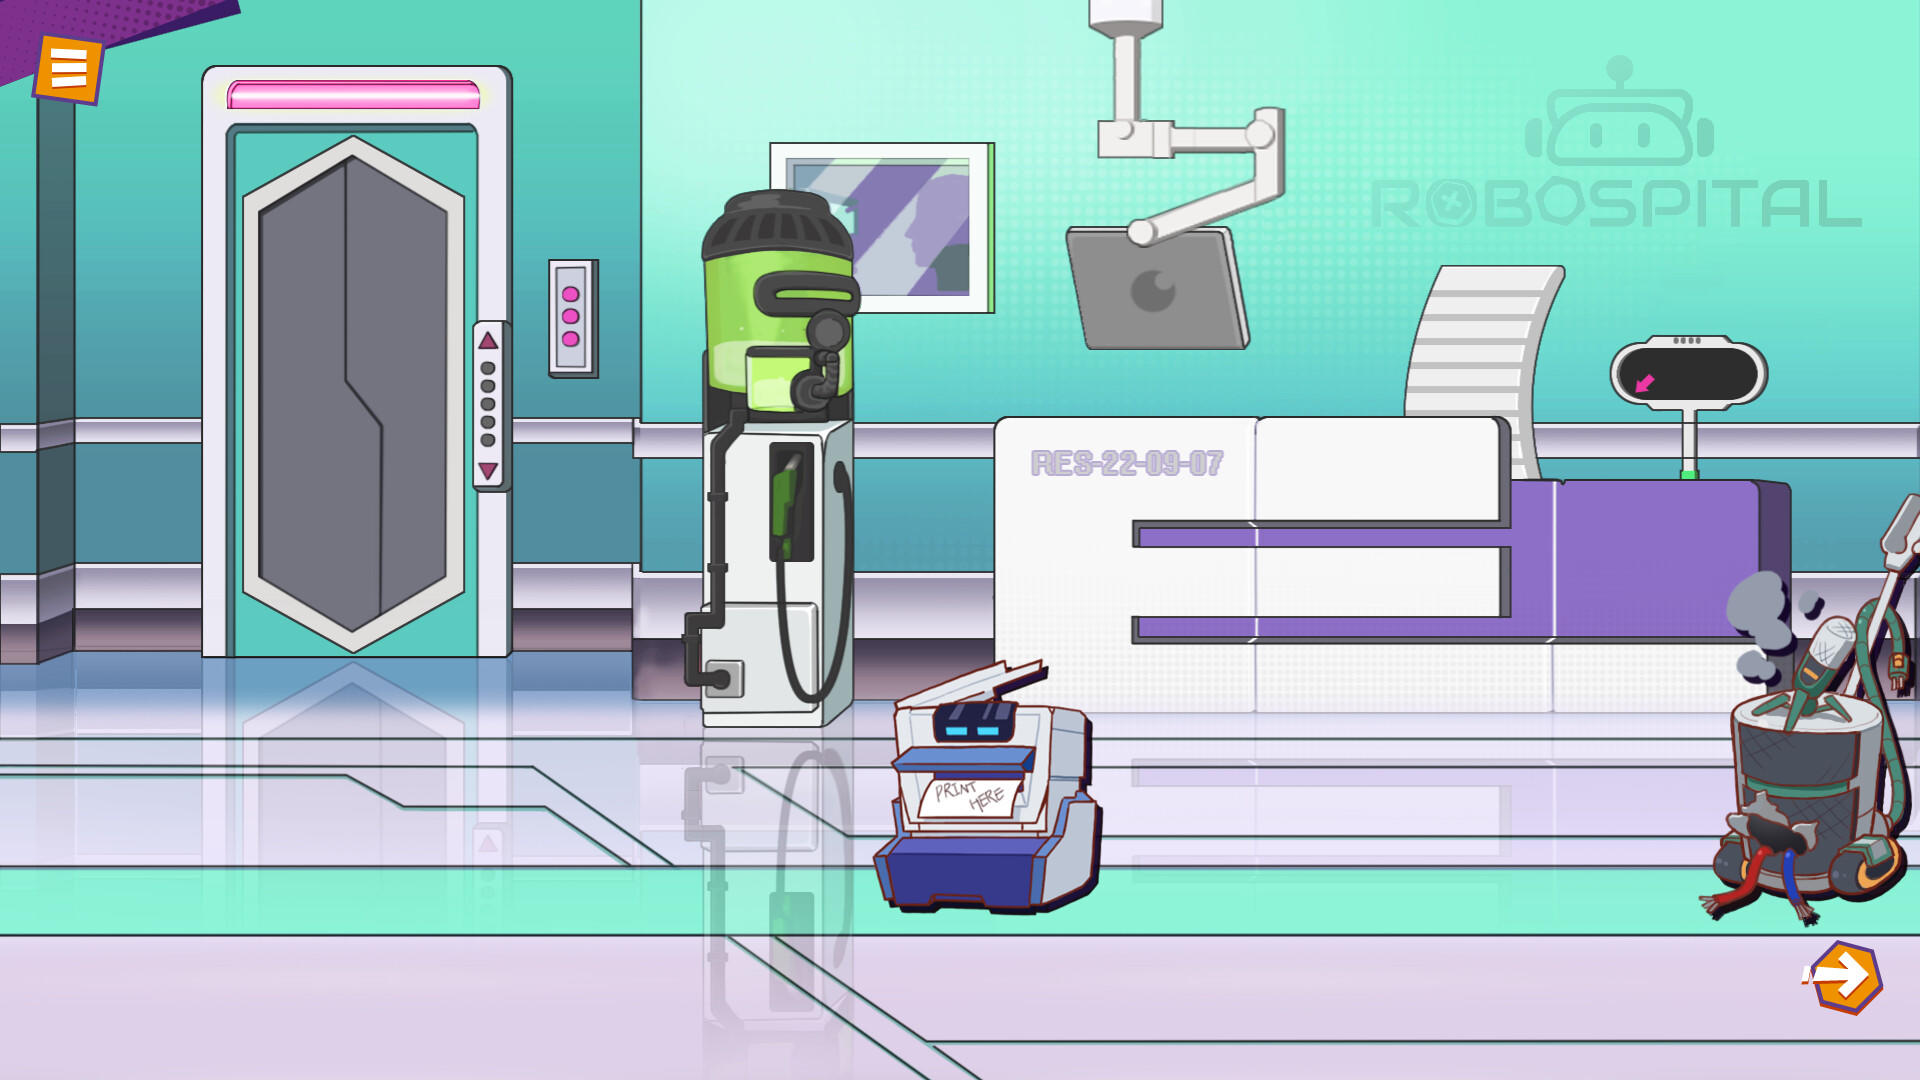 Screenshot of Robospital